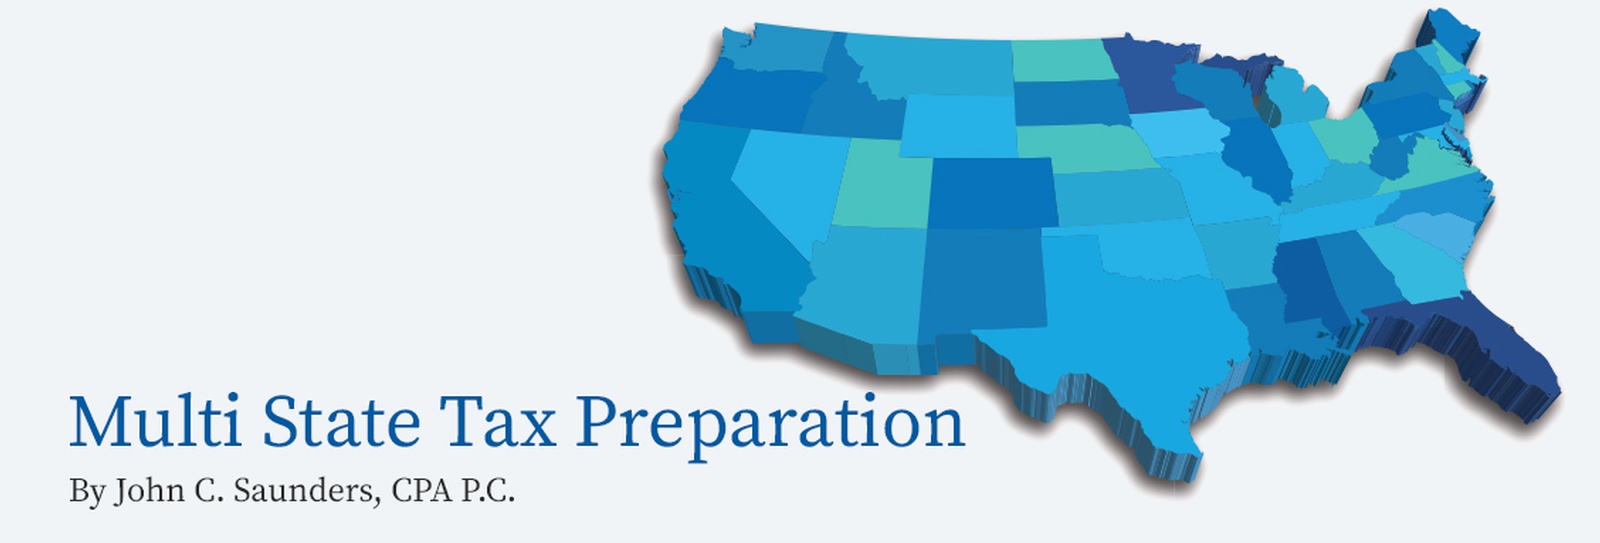 Multi State Tax Preparation